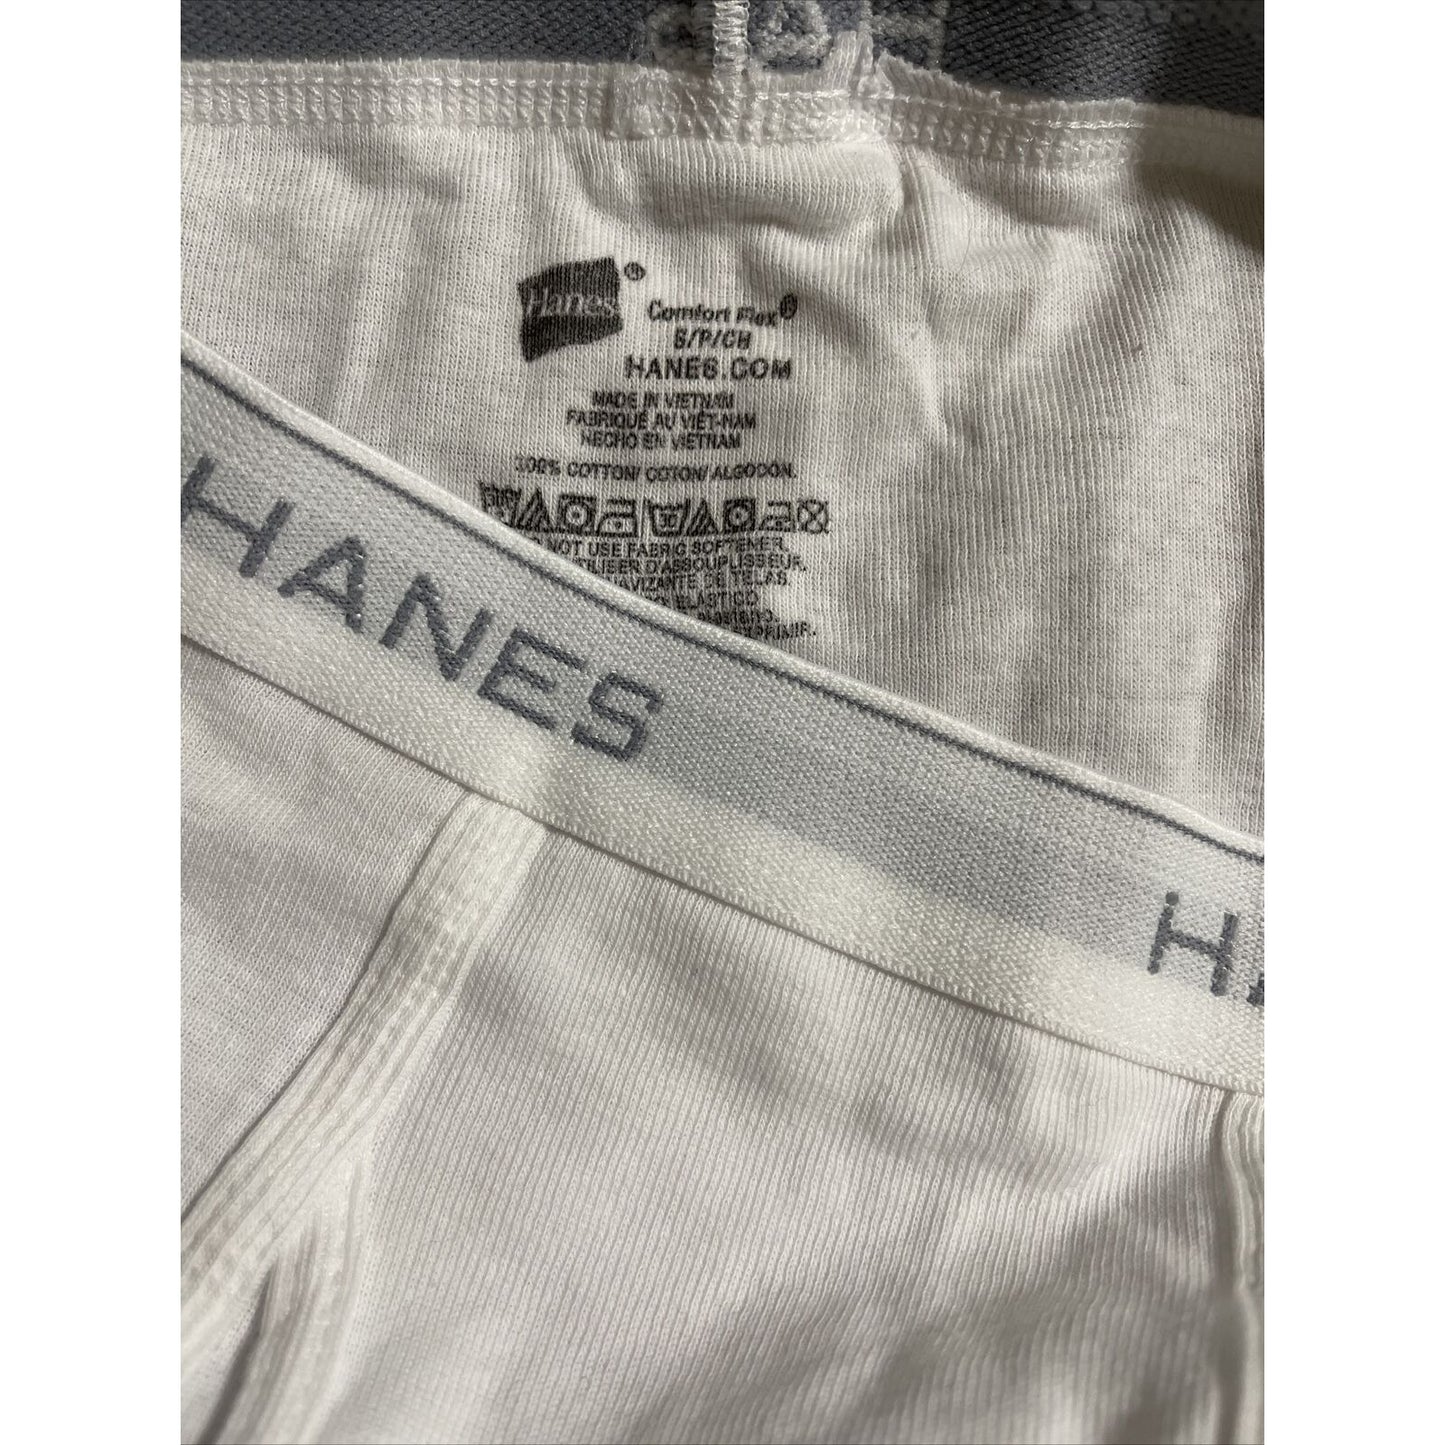 Men’s Hanes Comfort Flex White Briefs Size XL Tighty Whities New And Unworn